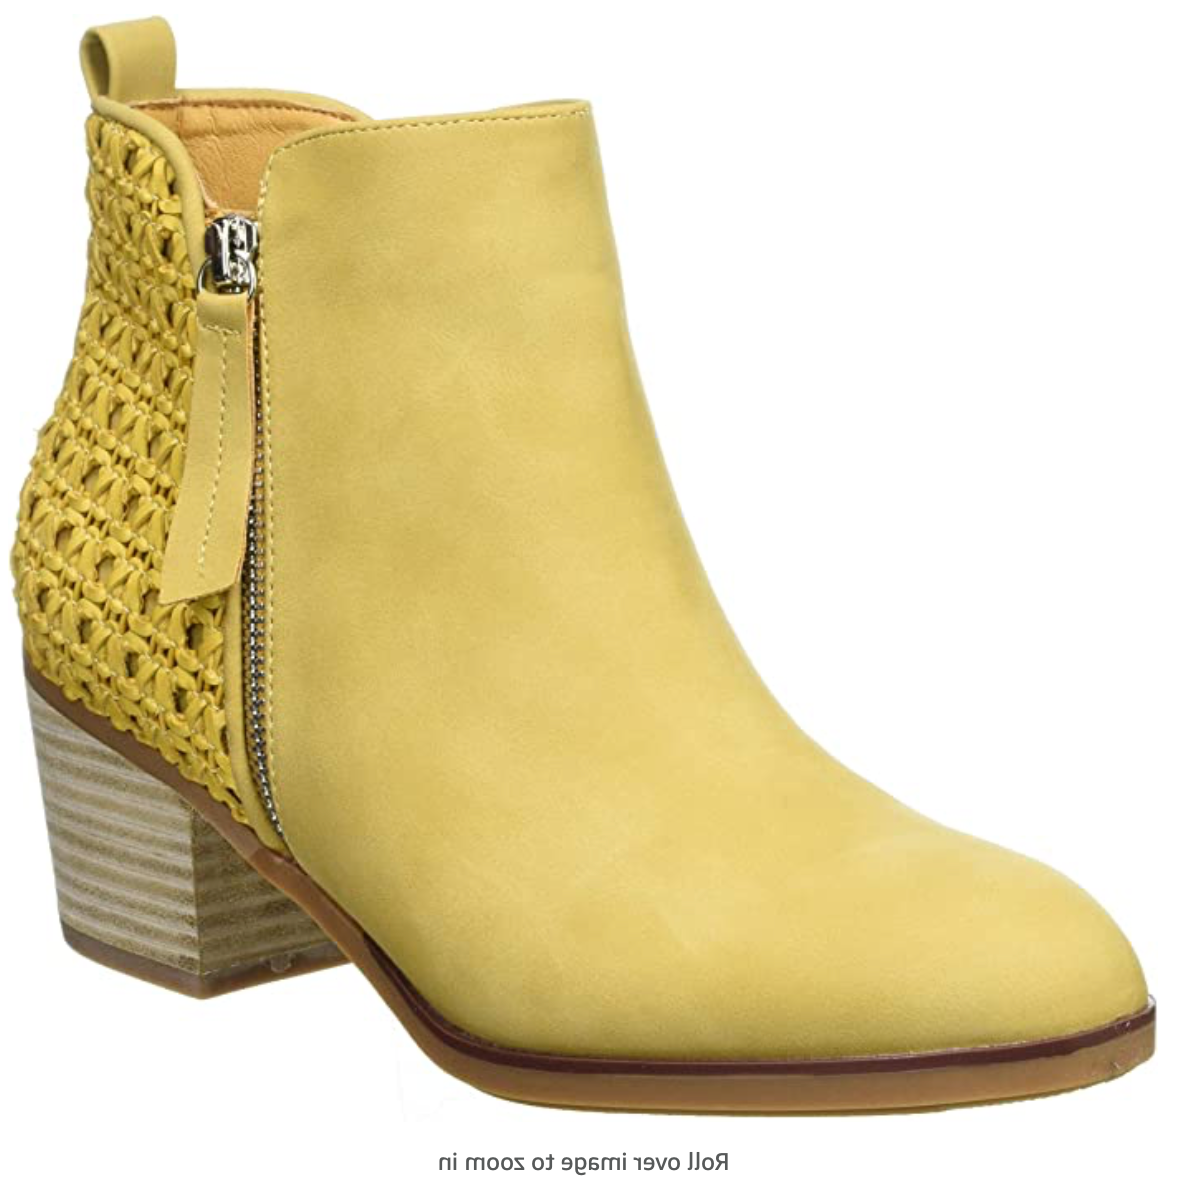 XTI - 42371 - Women's Fashion Boots - Yellow